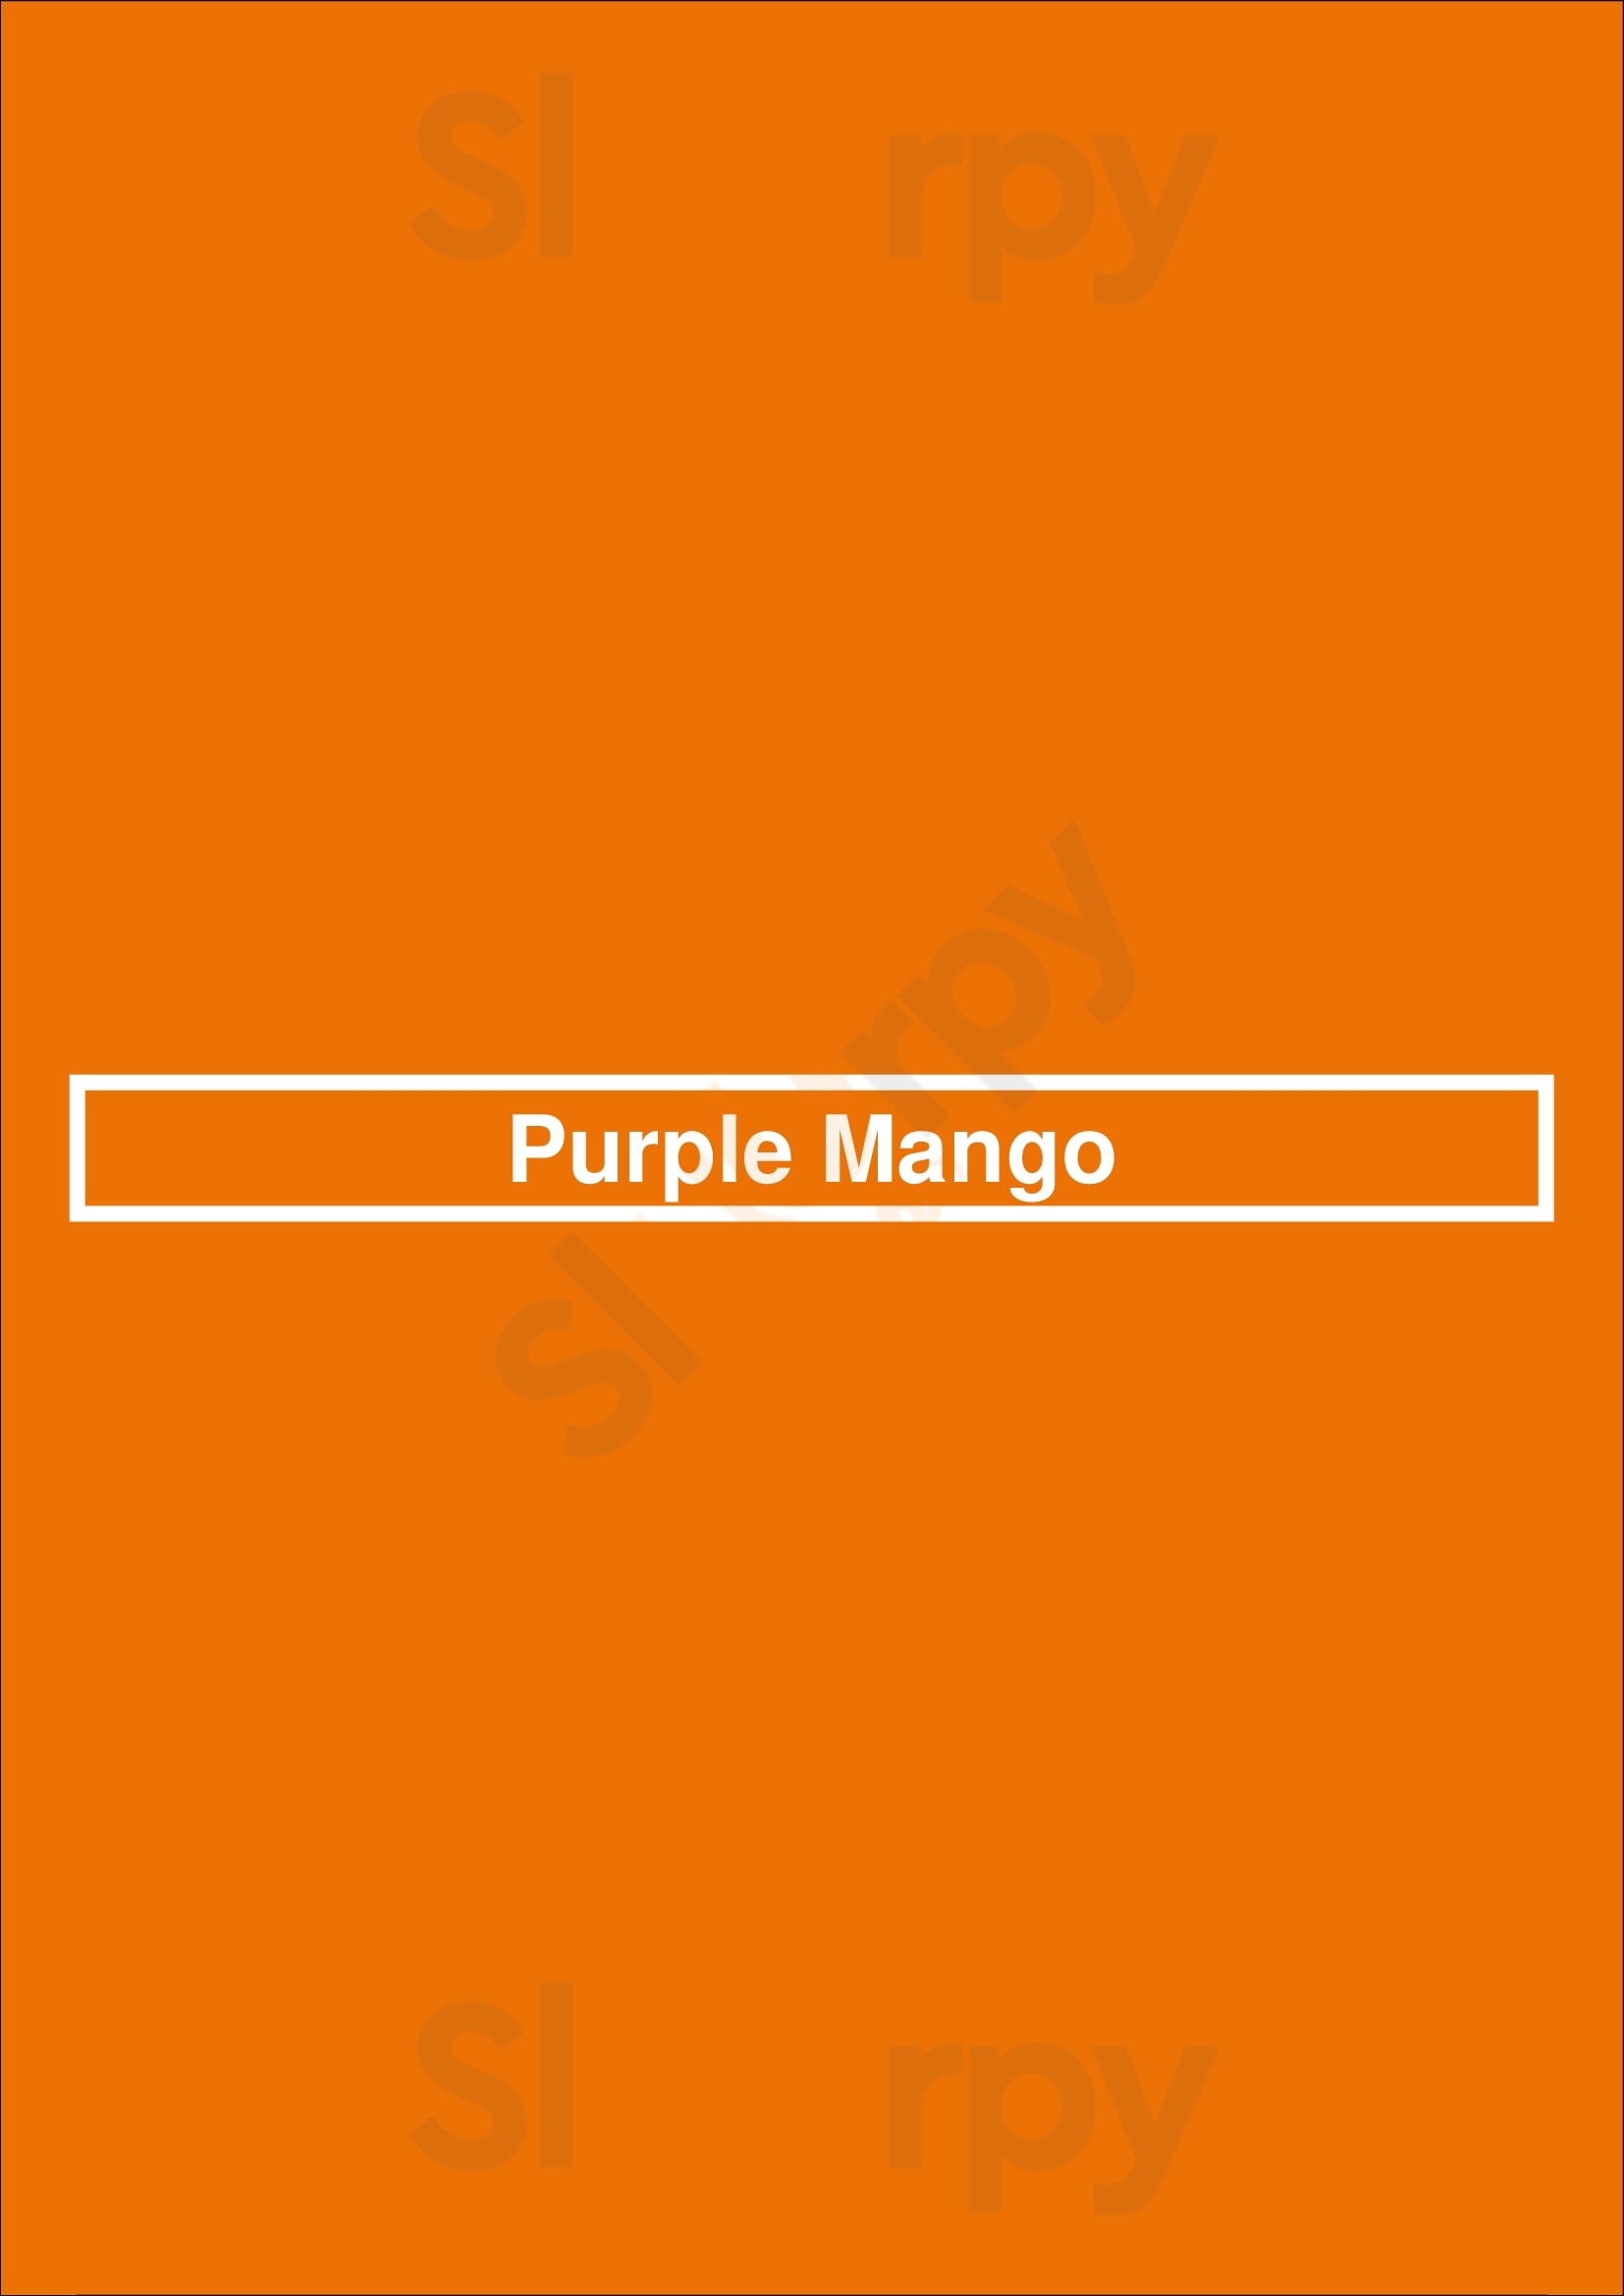 Purple Mango Portsmouth Menu - 1